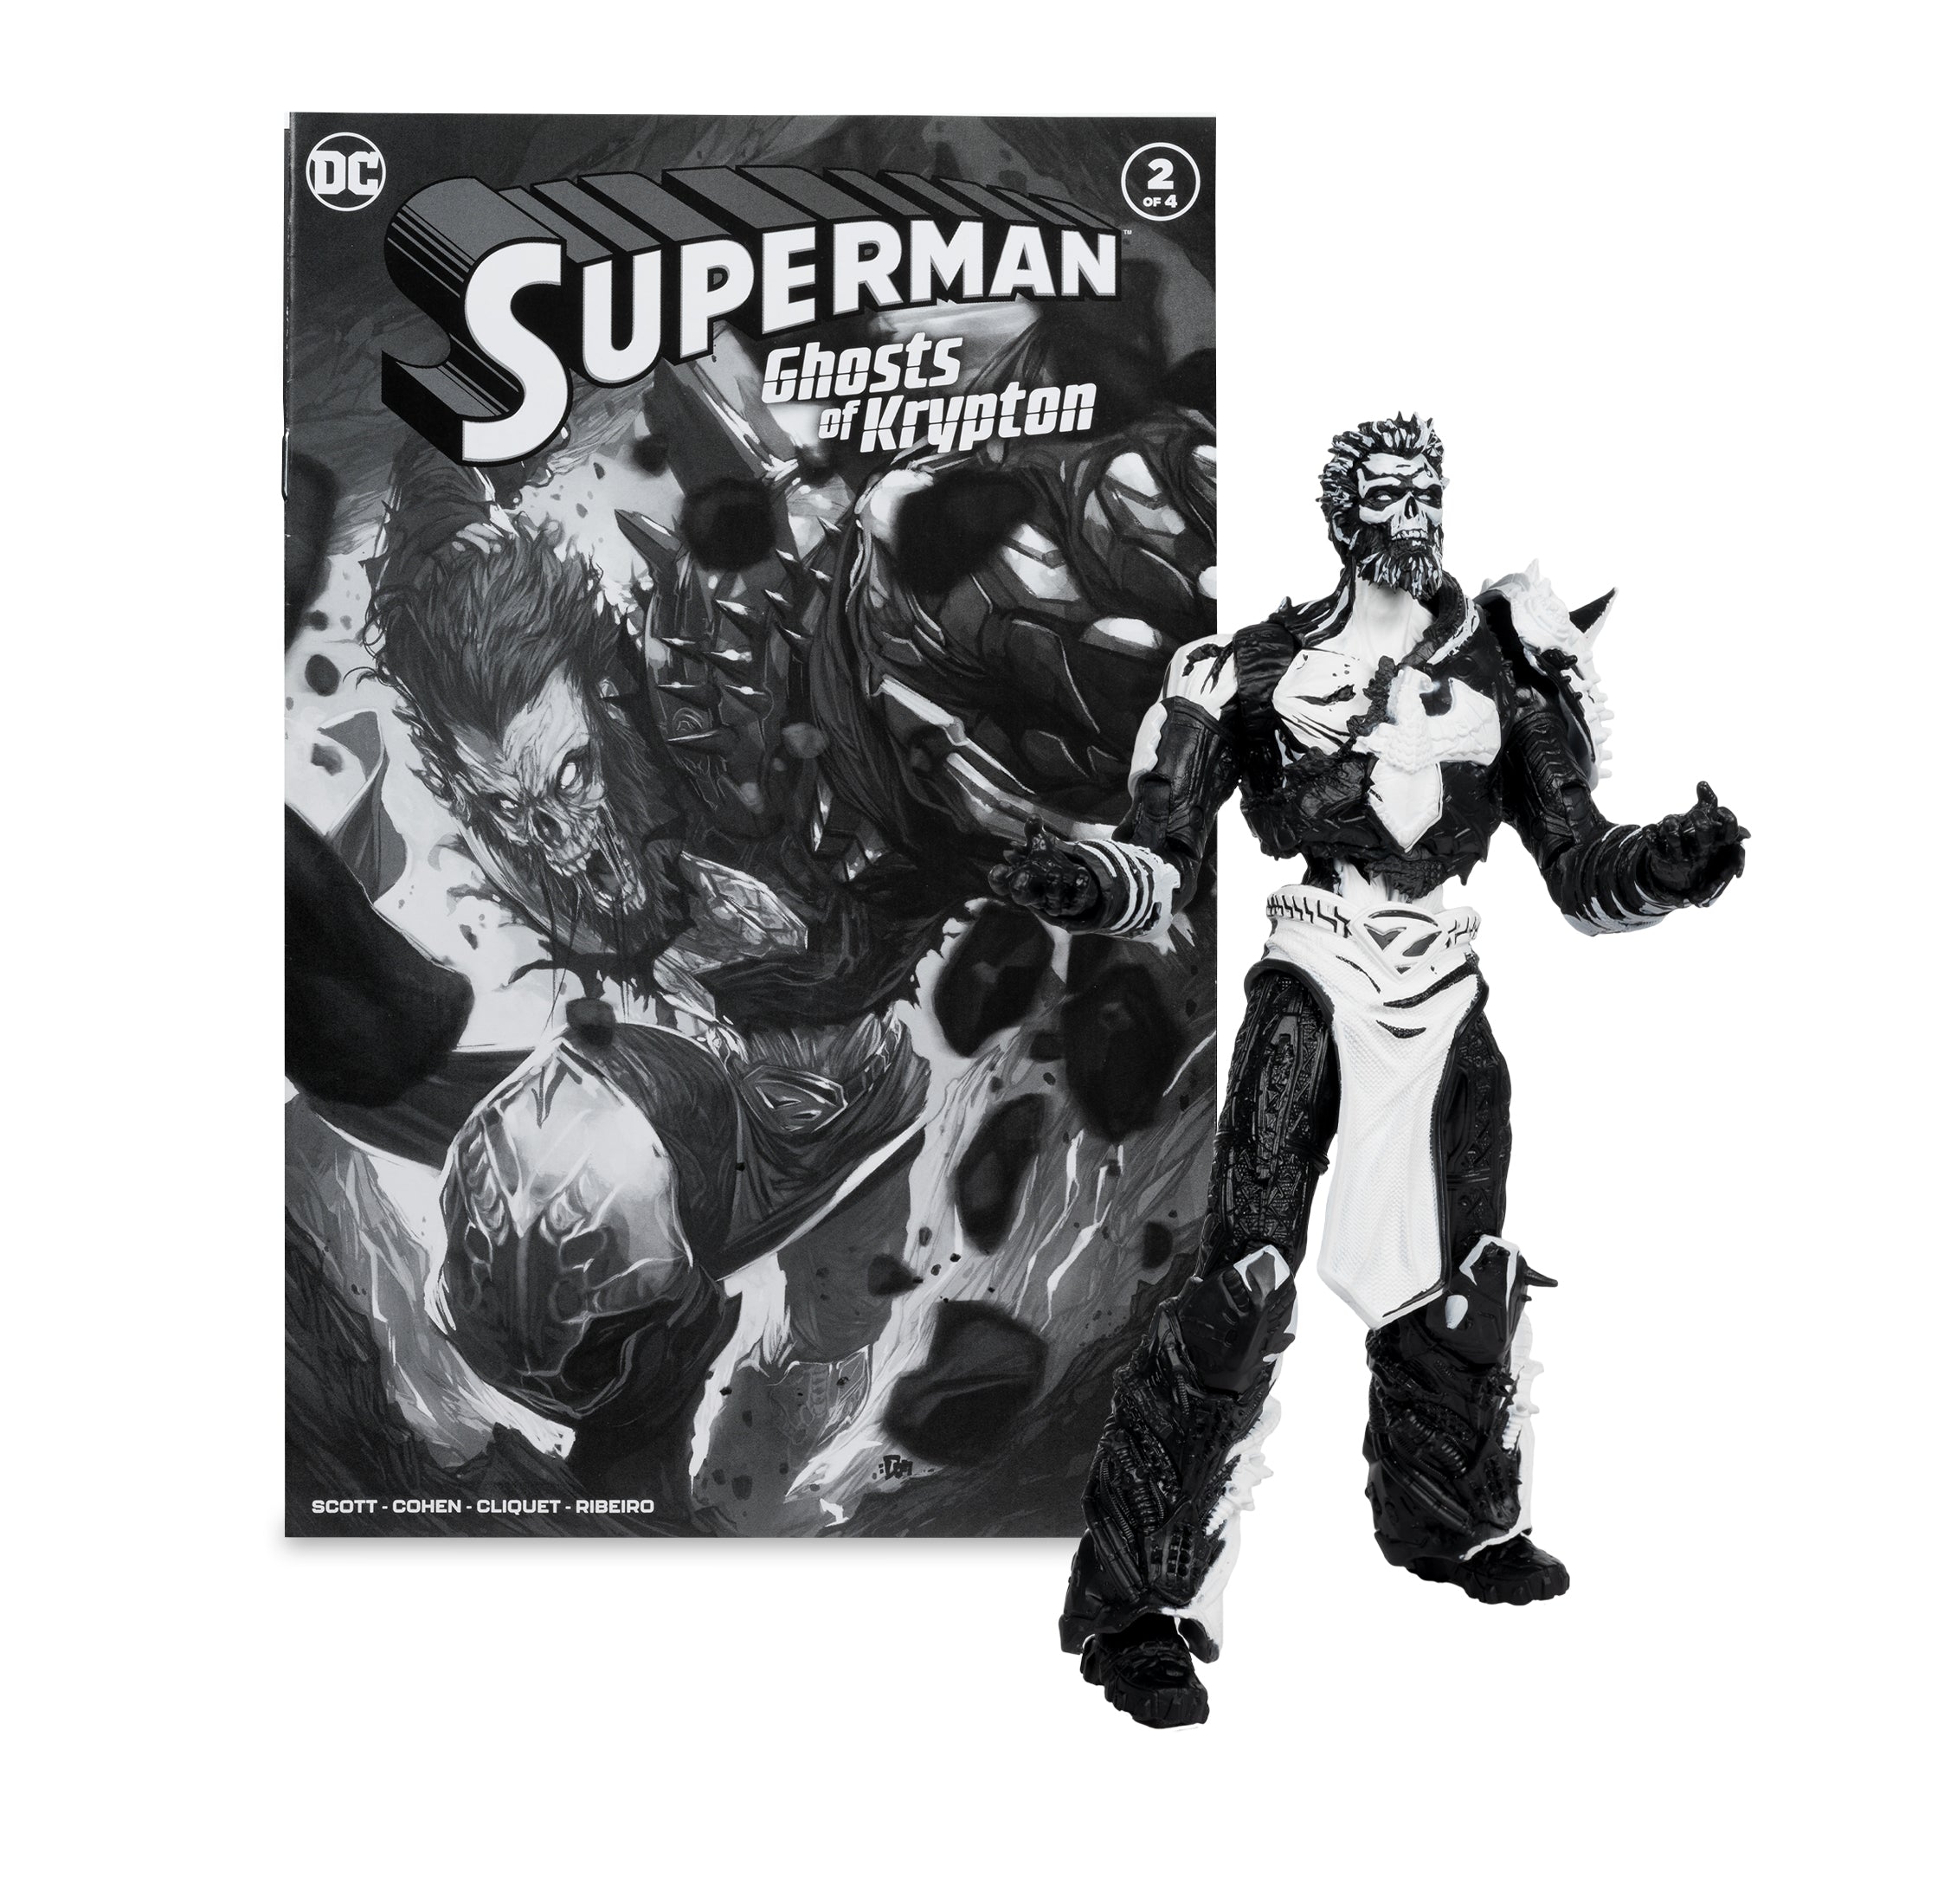 McFarlane Sketch: DC Comics - Superman Ghost of Krypton Gold Label 7 Pulgadas 4 Pack con Comic